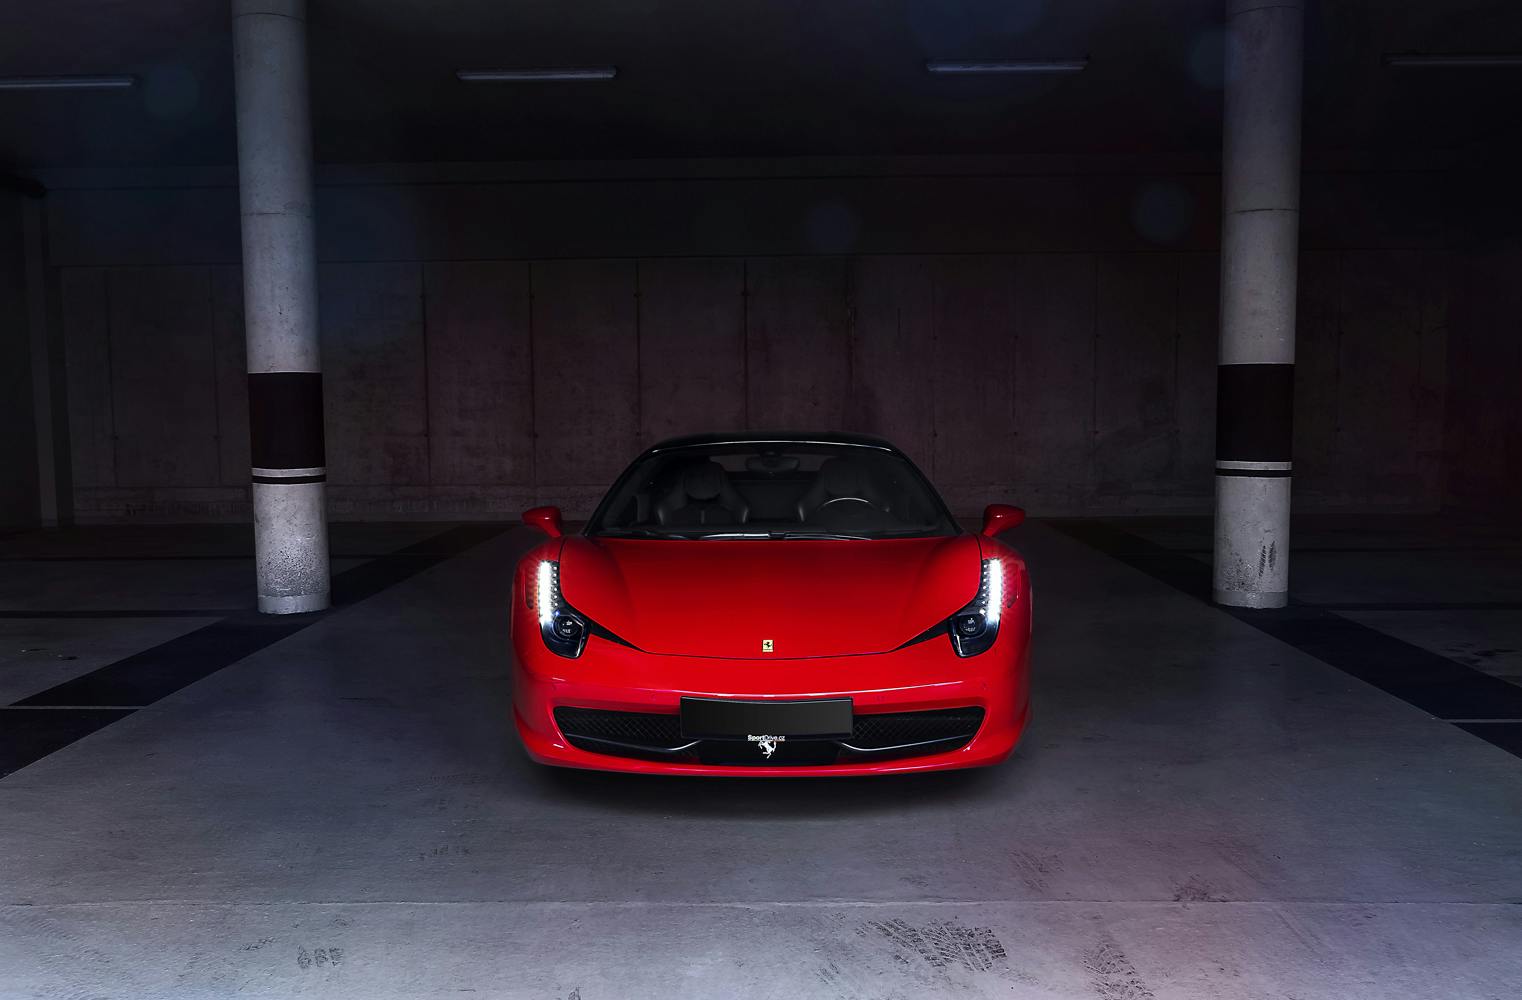 Traumauto fahren | Probefahrt mit dem Ferrari 458 Italia